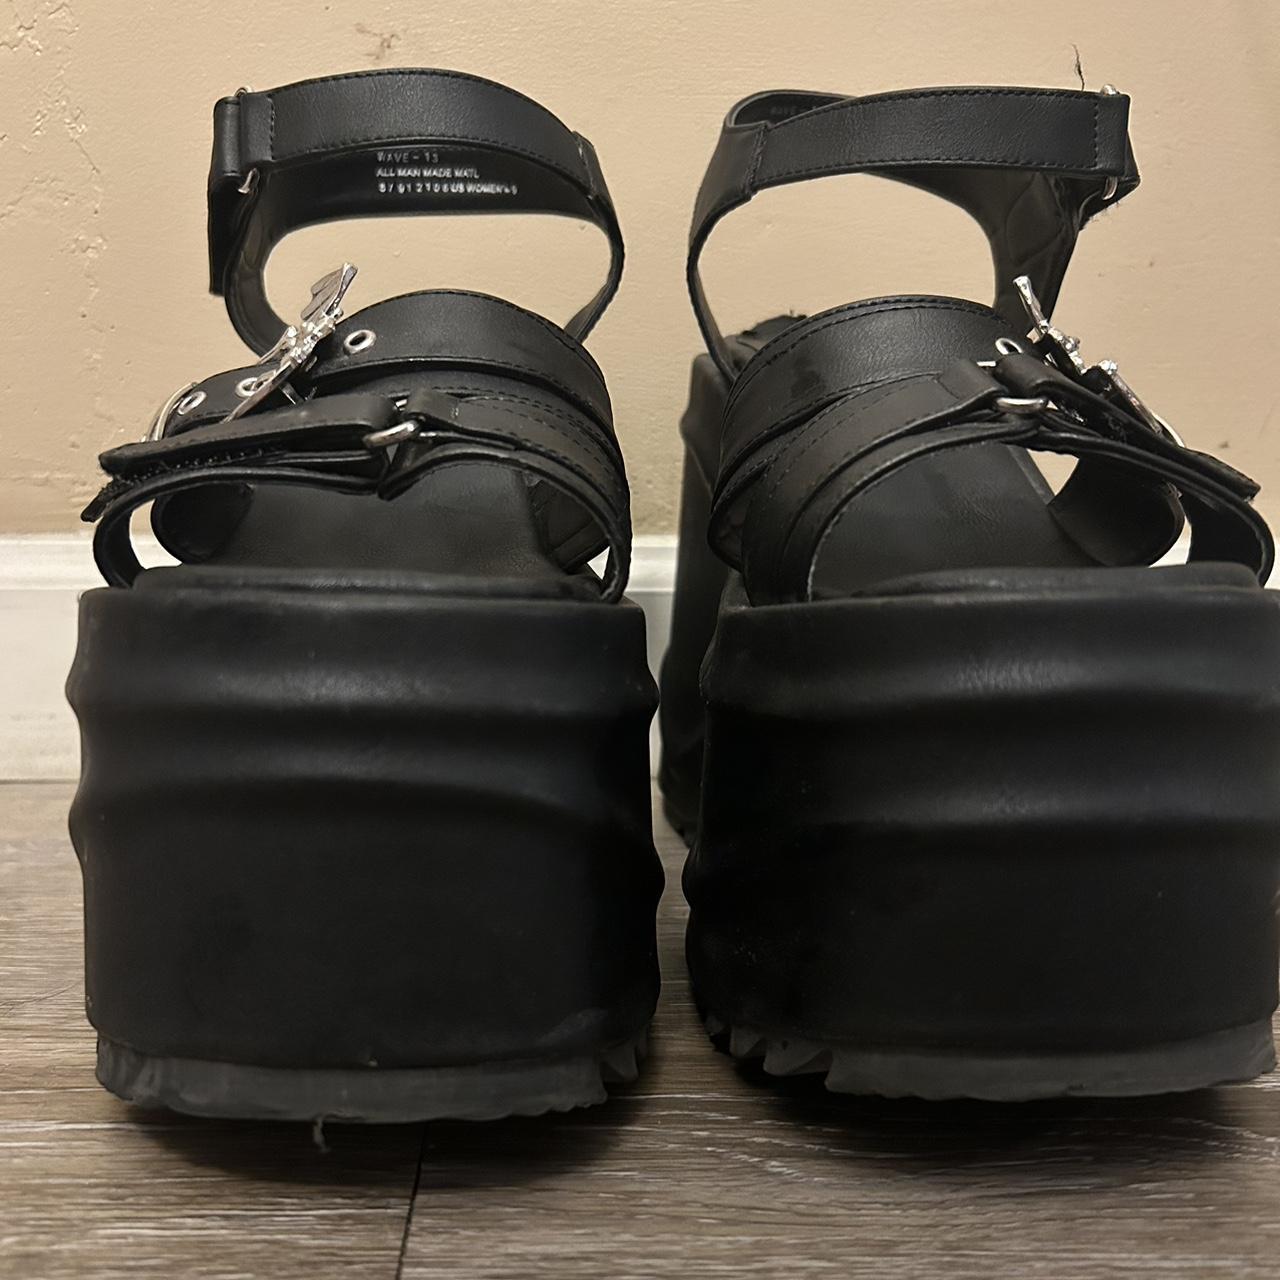 Demonia Women's Black Sandals (2)